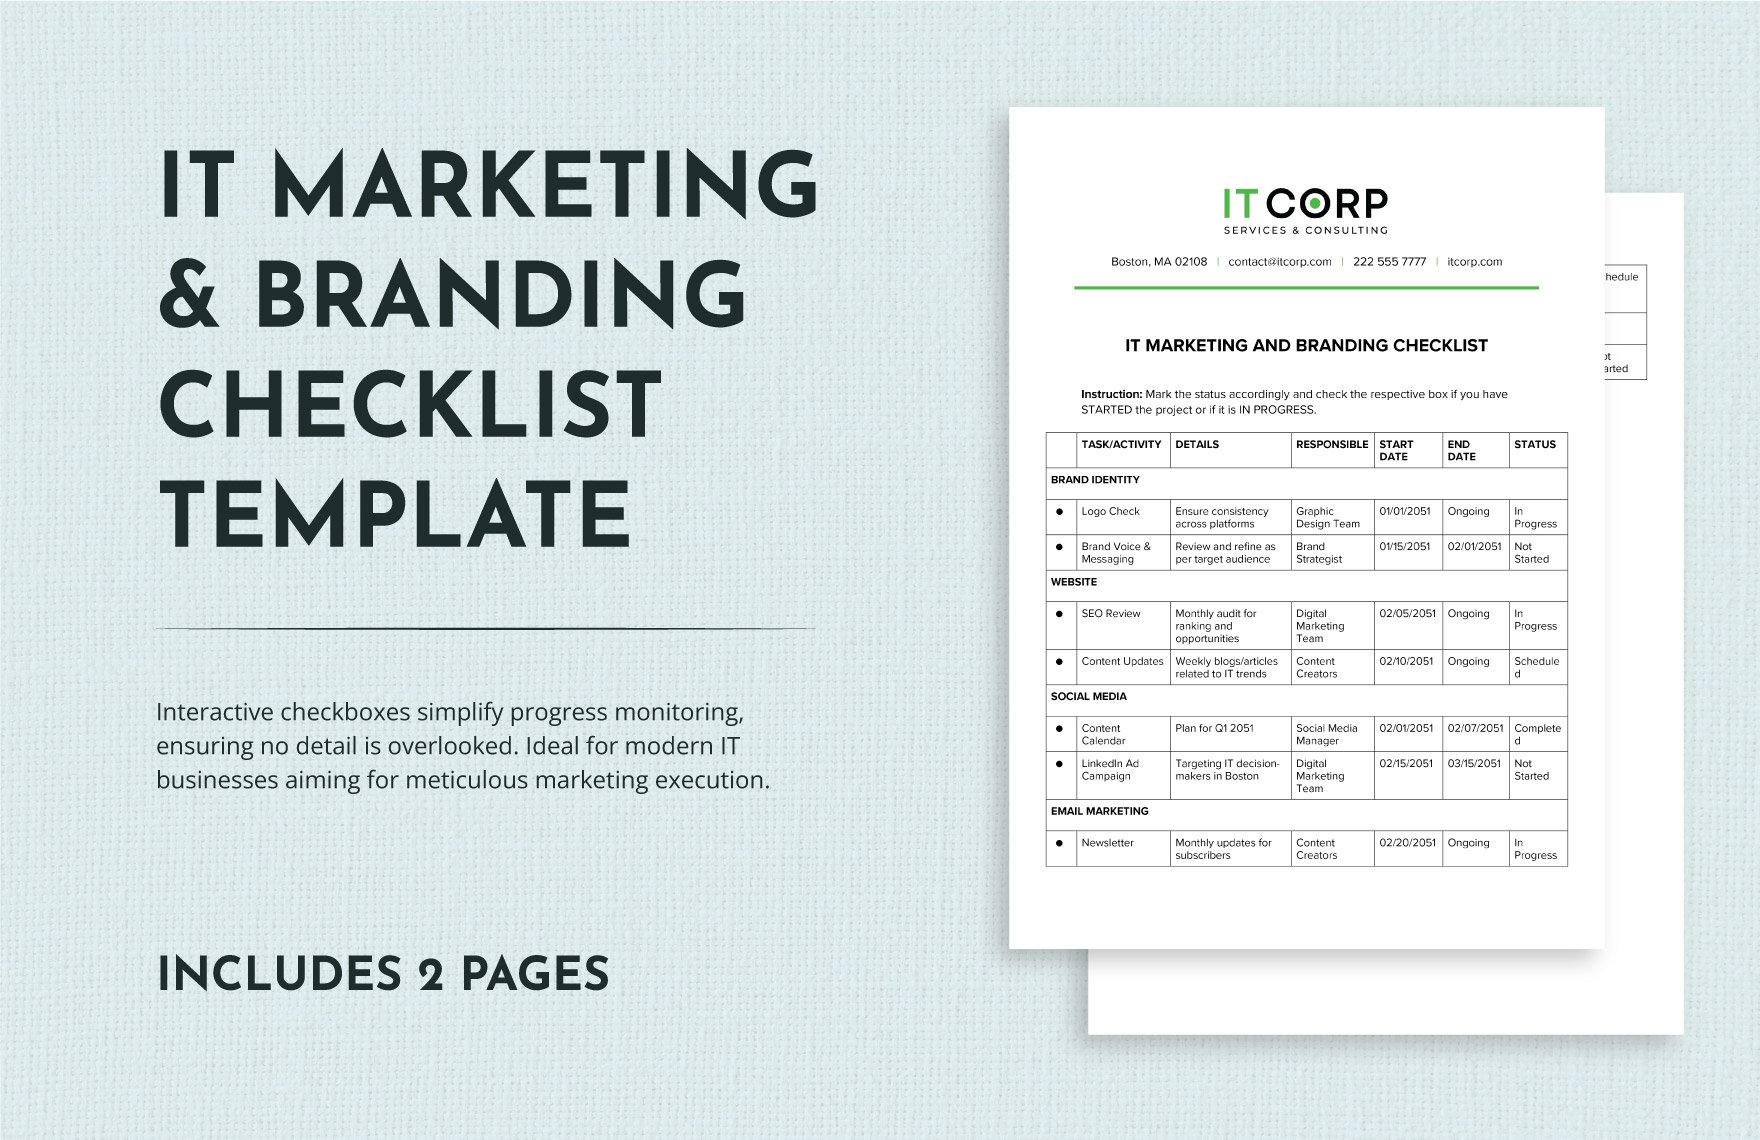 IT Marketing & Branding Checklist Template in Word, Google Docs, PDF